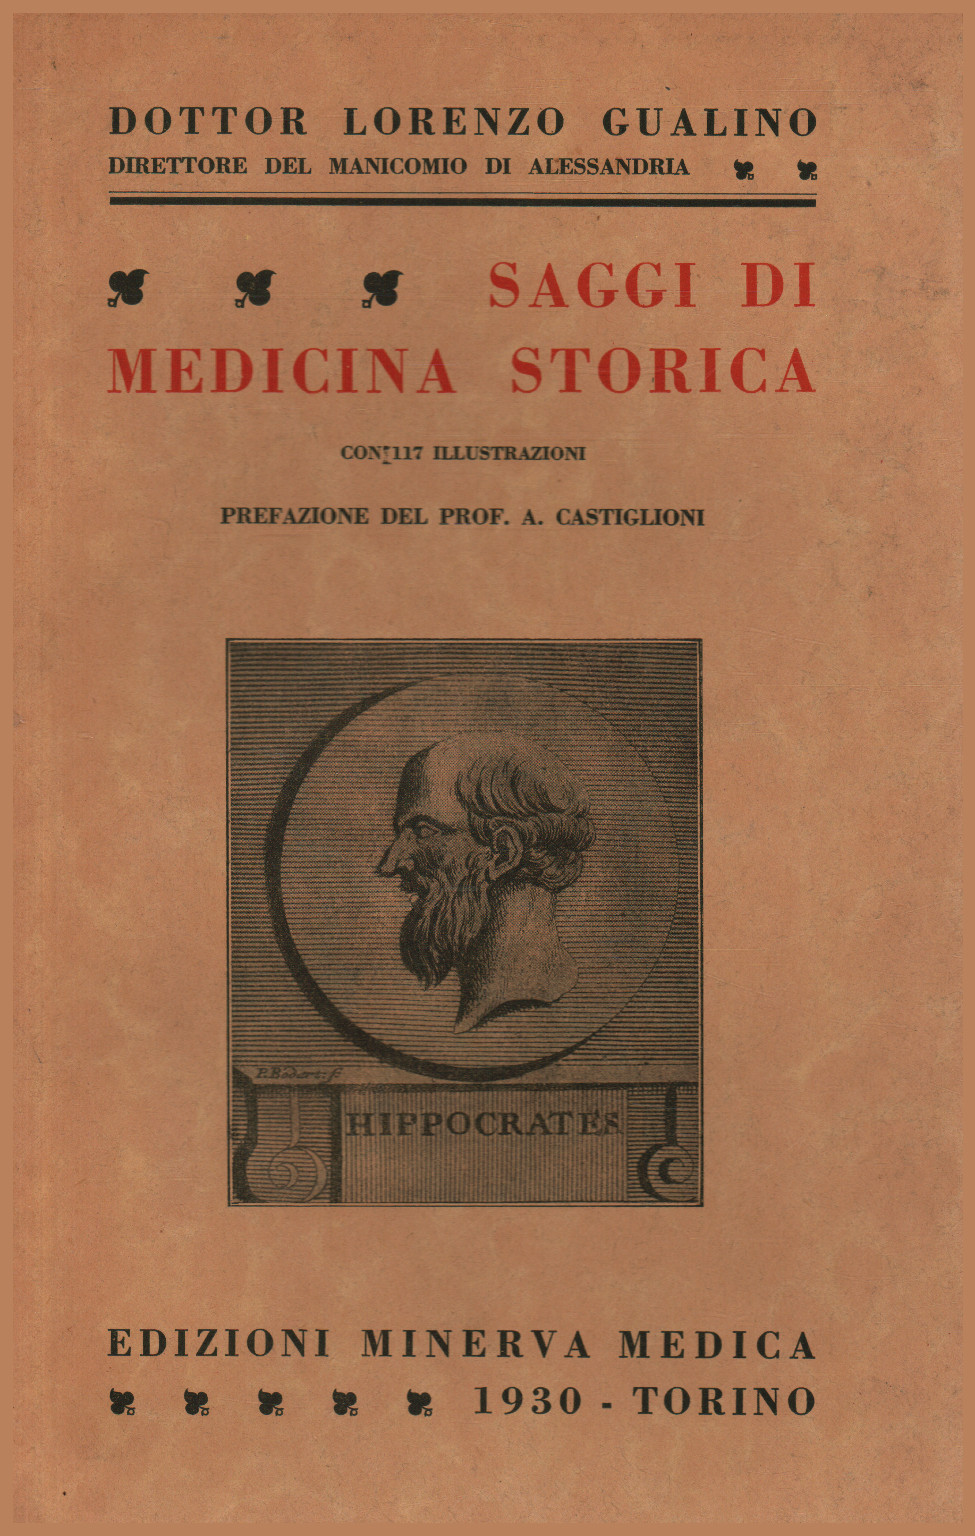 Rates of medicine historical, Lorenzo Gualino